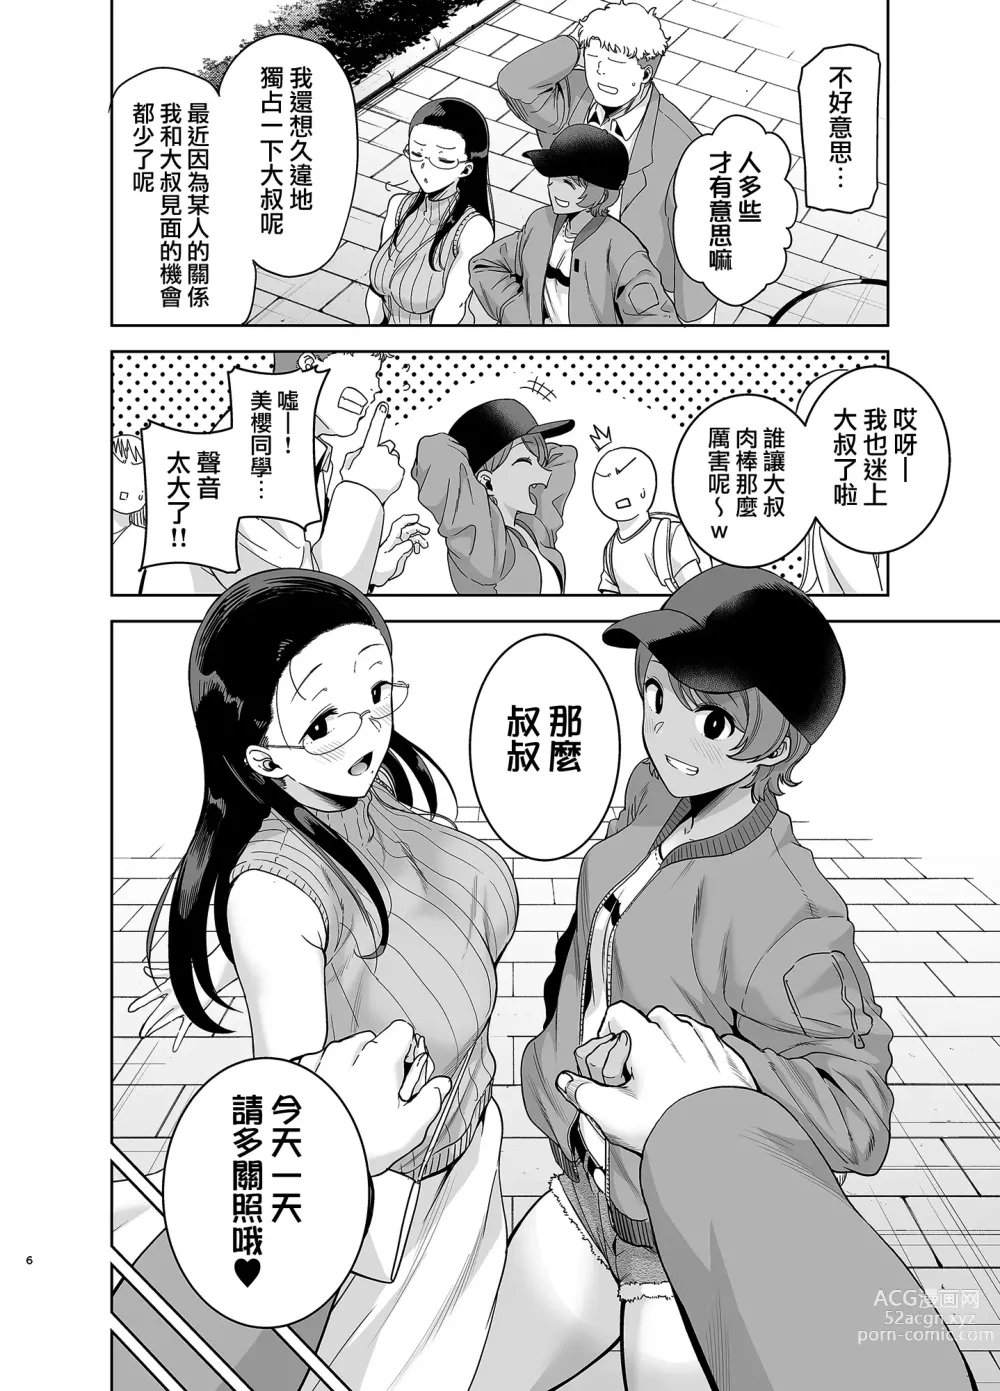 Page 5 of manga 聖華女学院高等部公認竿おじさん 3